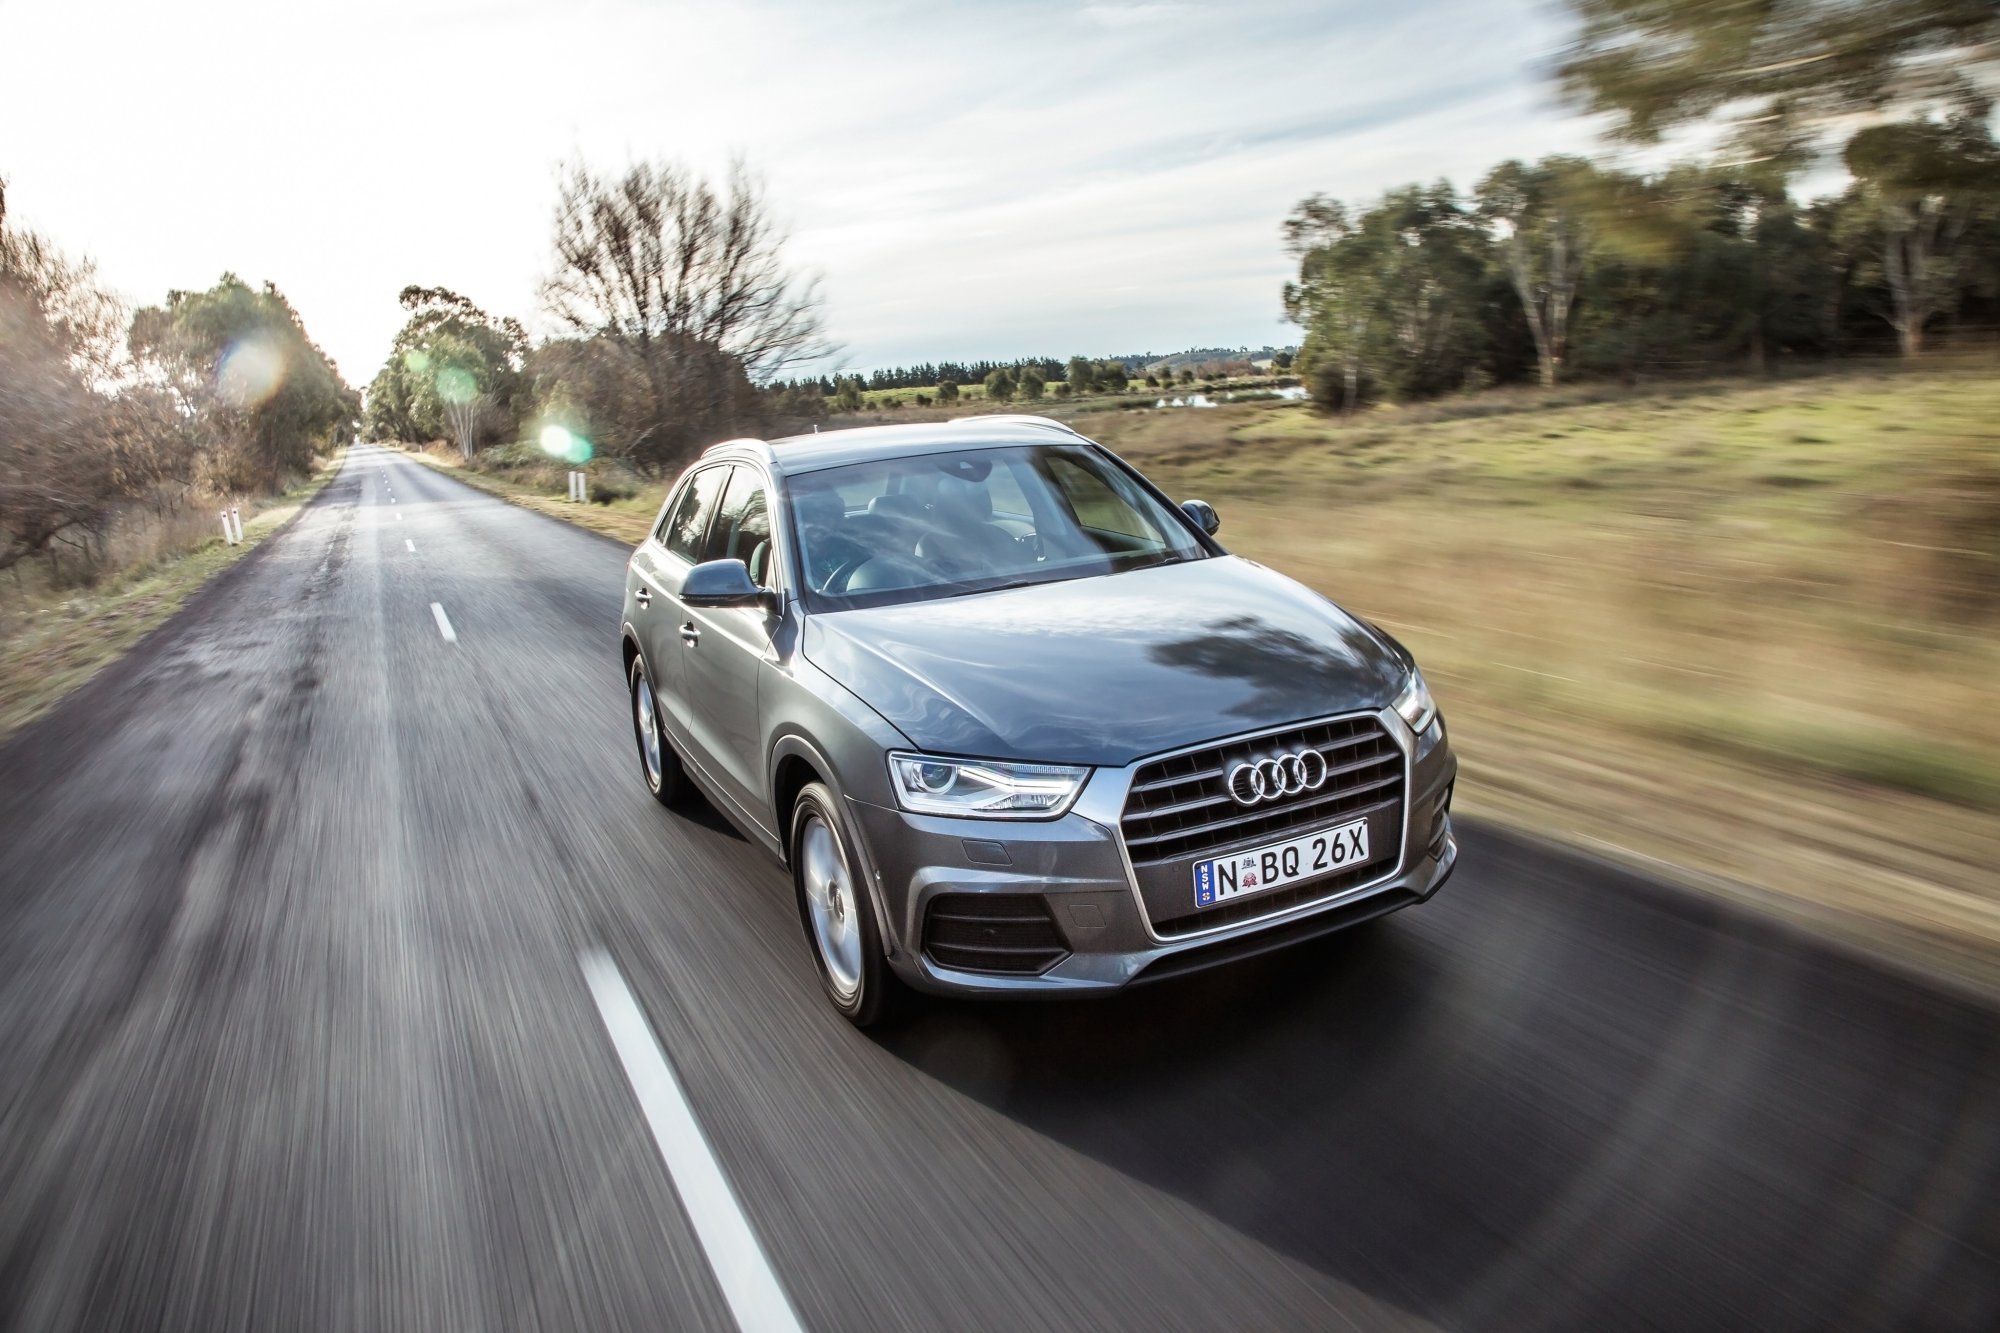 Review - 2016 Audi Q3 - Review